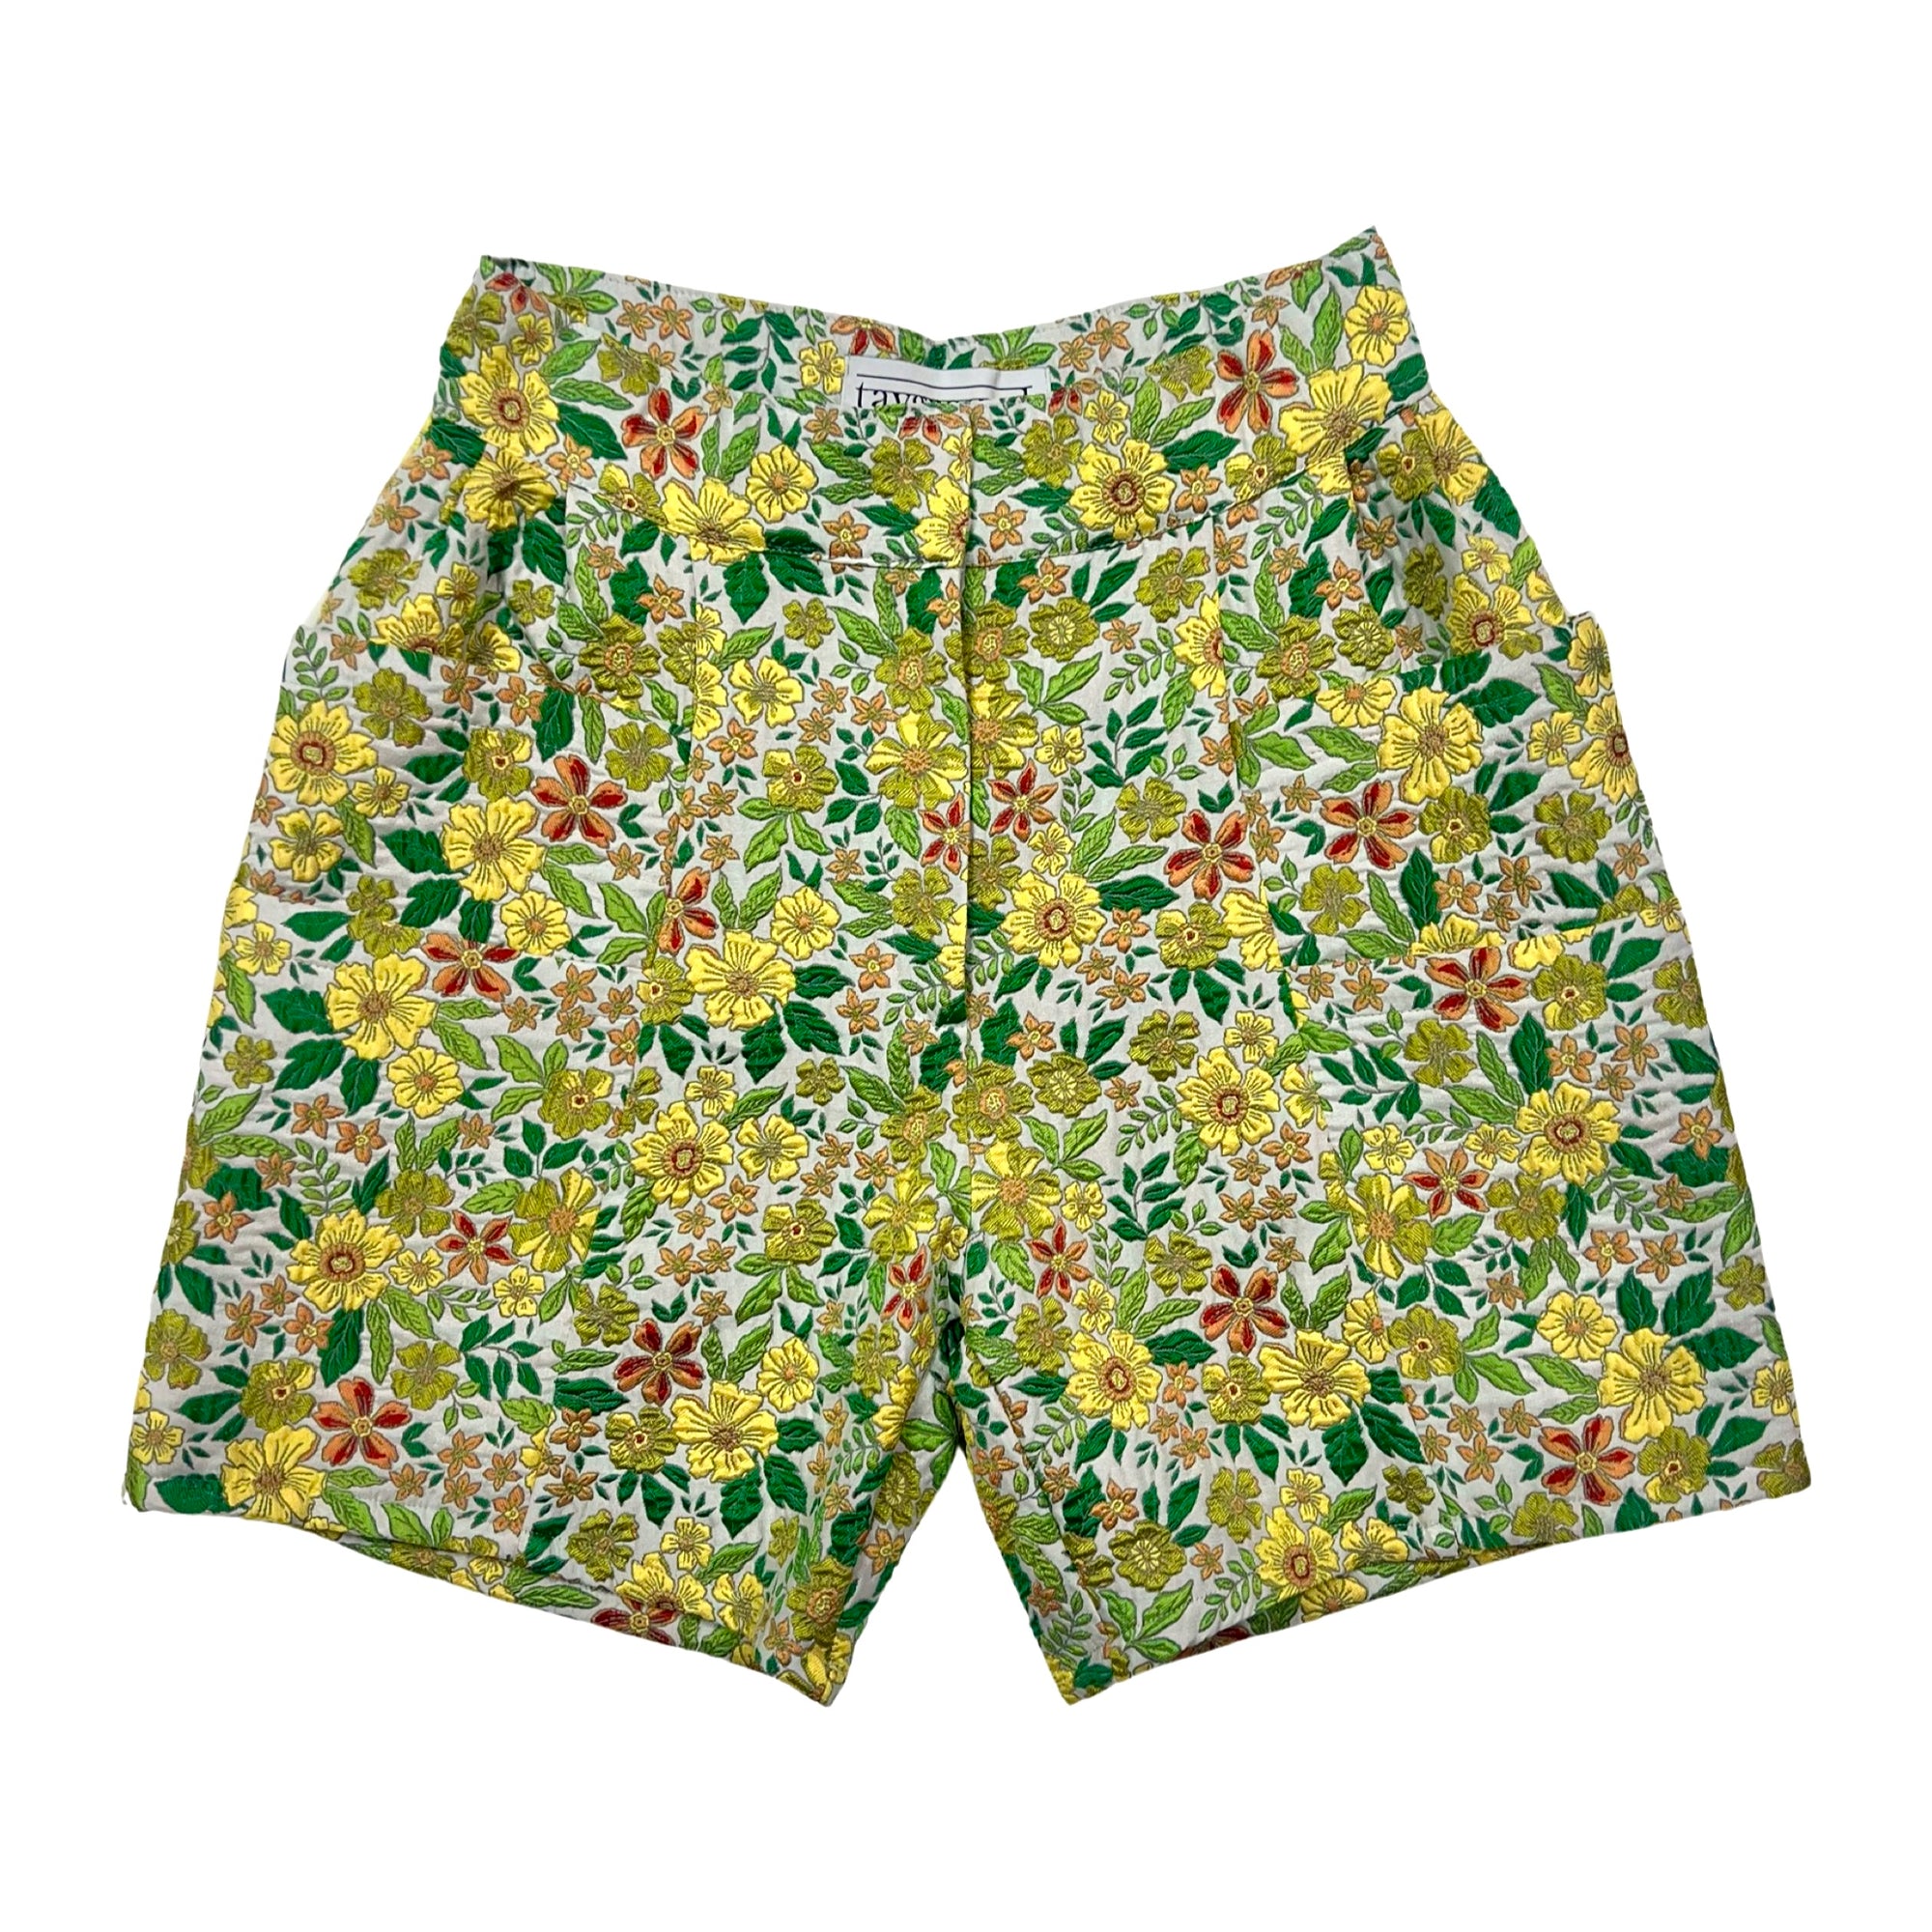 Men's Utility Shorts in Floral Jacquard